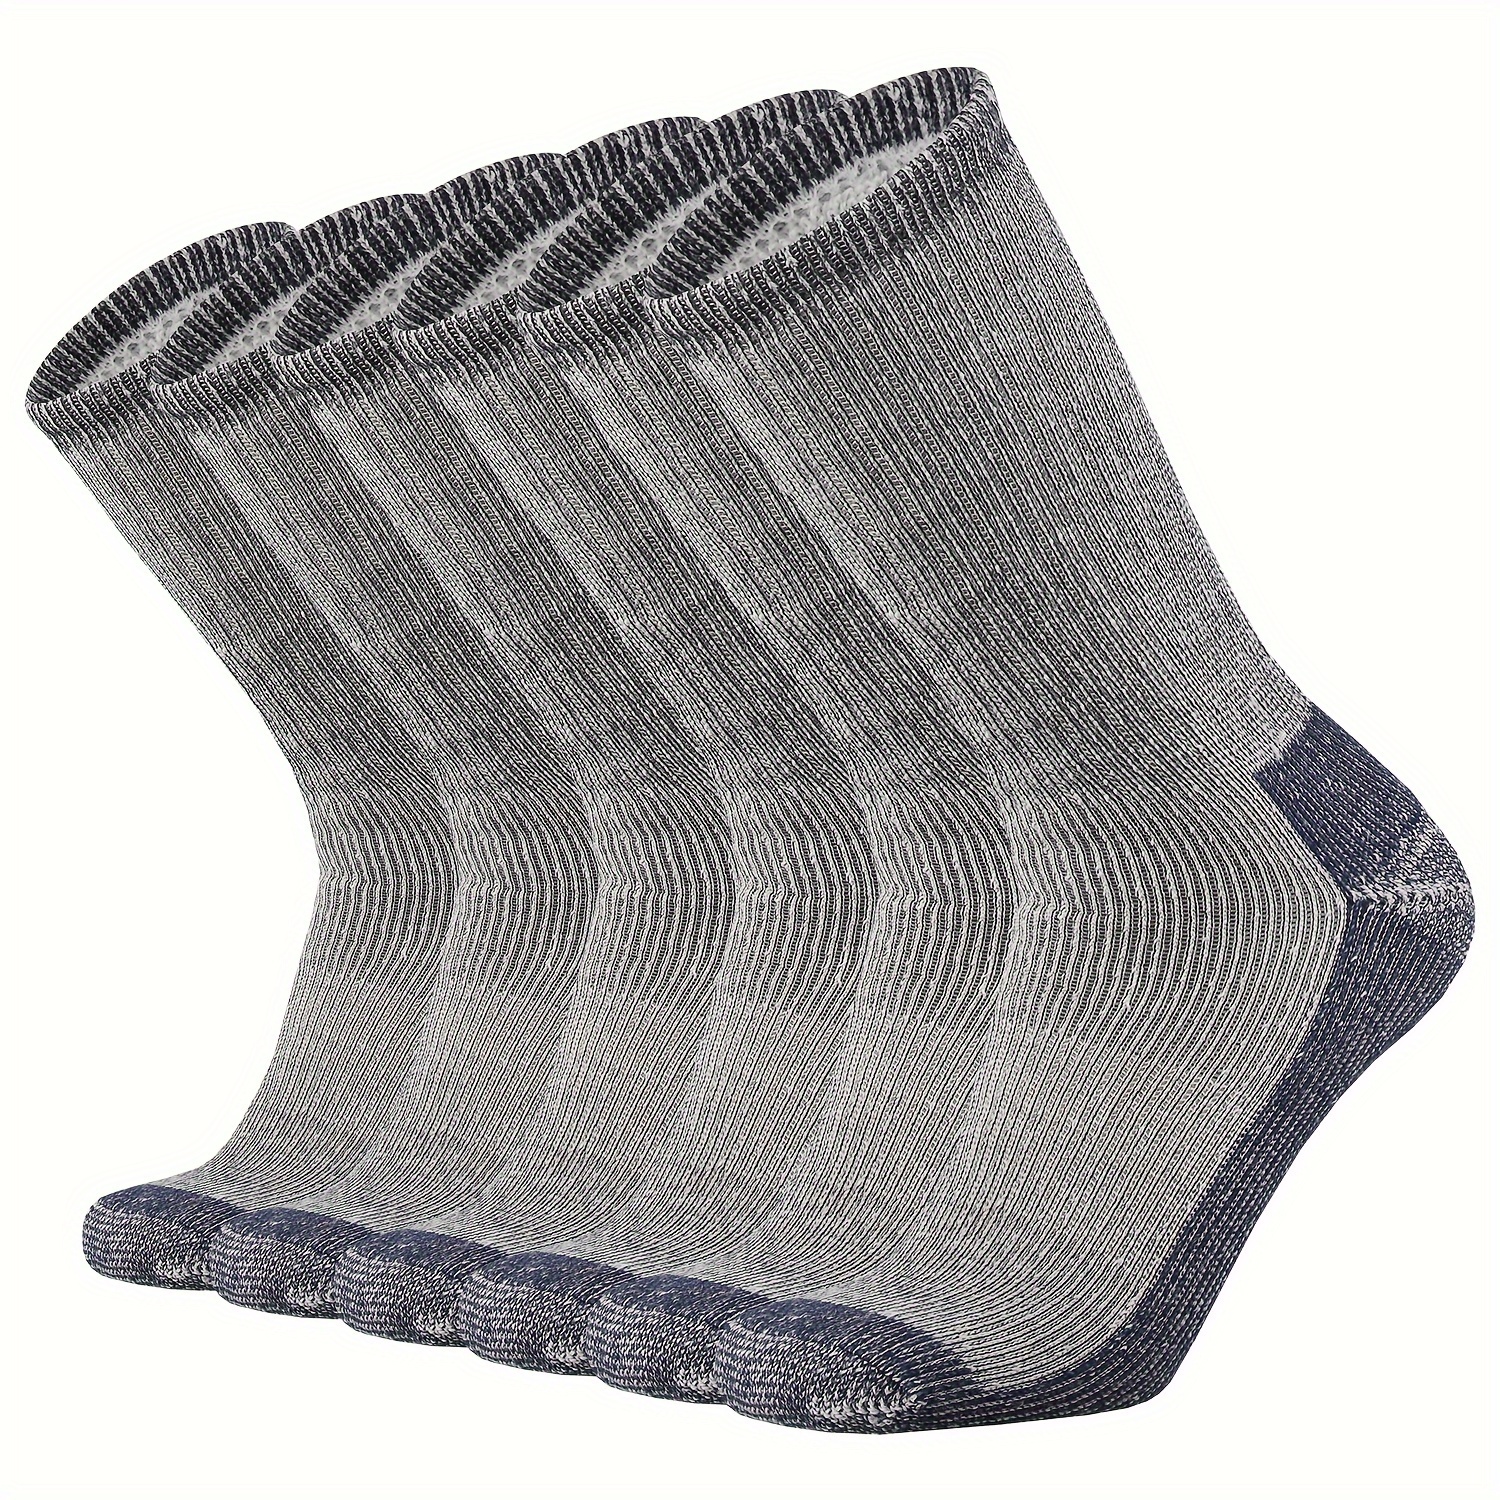 

Men's Merino Wool Cushion Crew Socks Moisture Wicking Control For Outdoor Hiking Work Boot Thermal Warm All Seasons 3 Pack